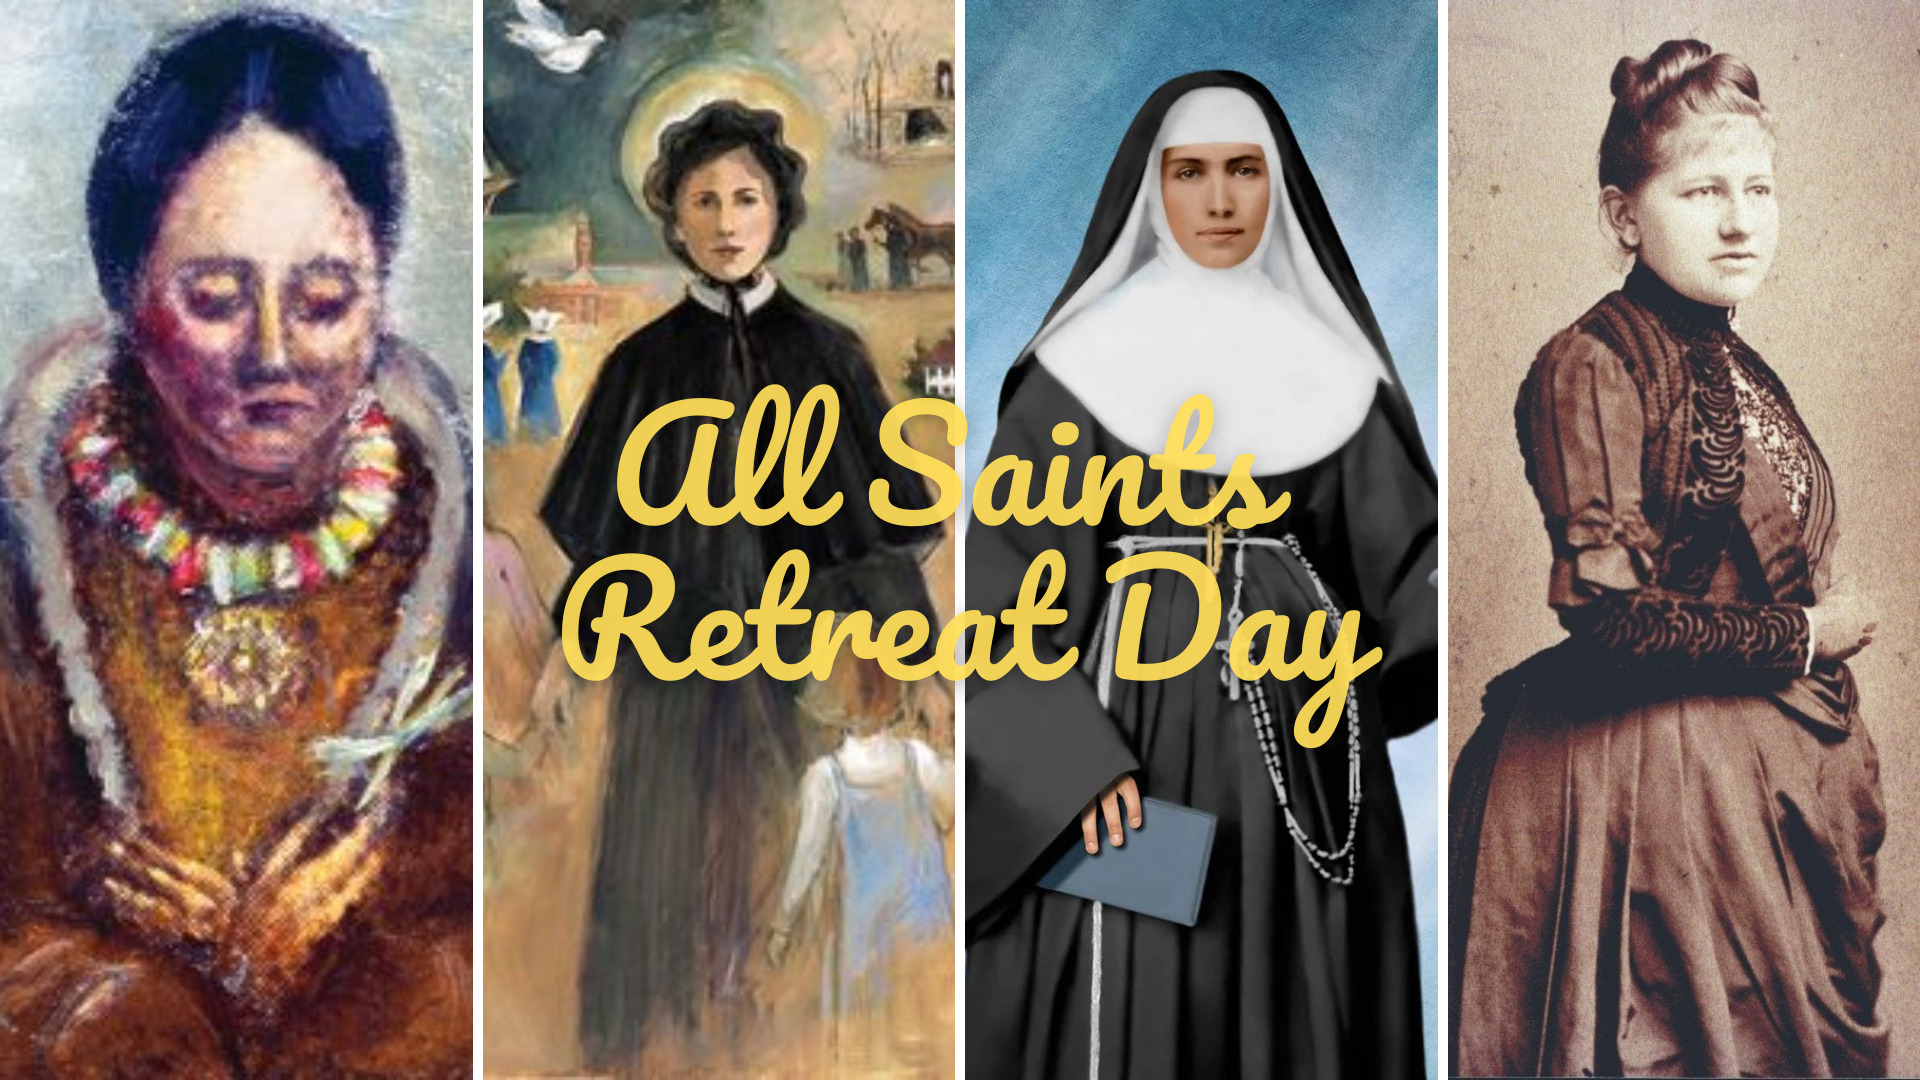 All Saints Day Retreat